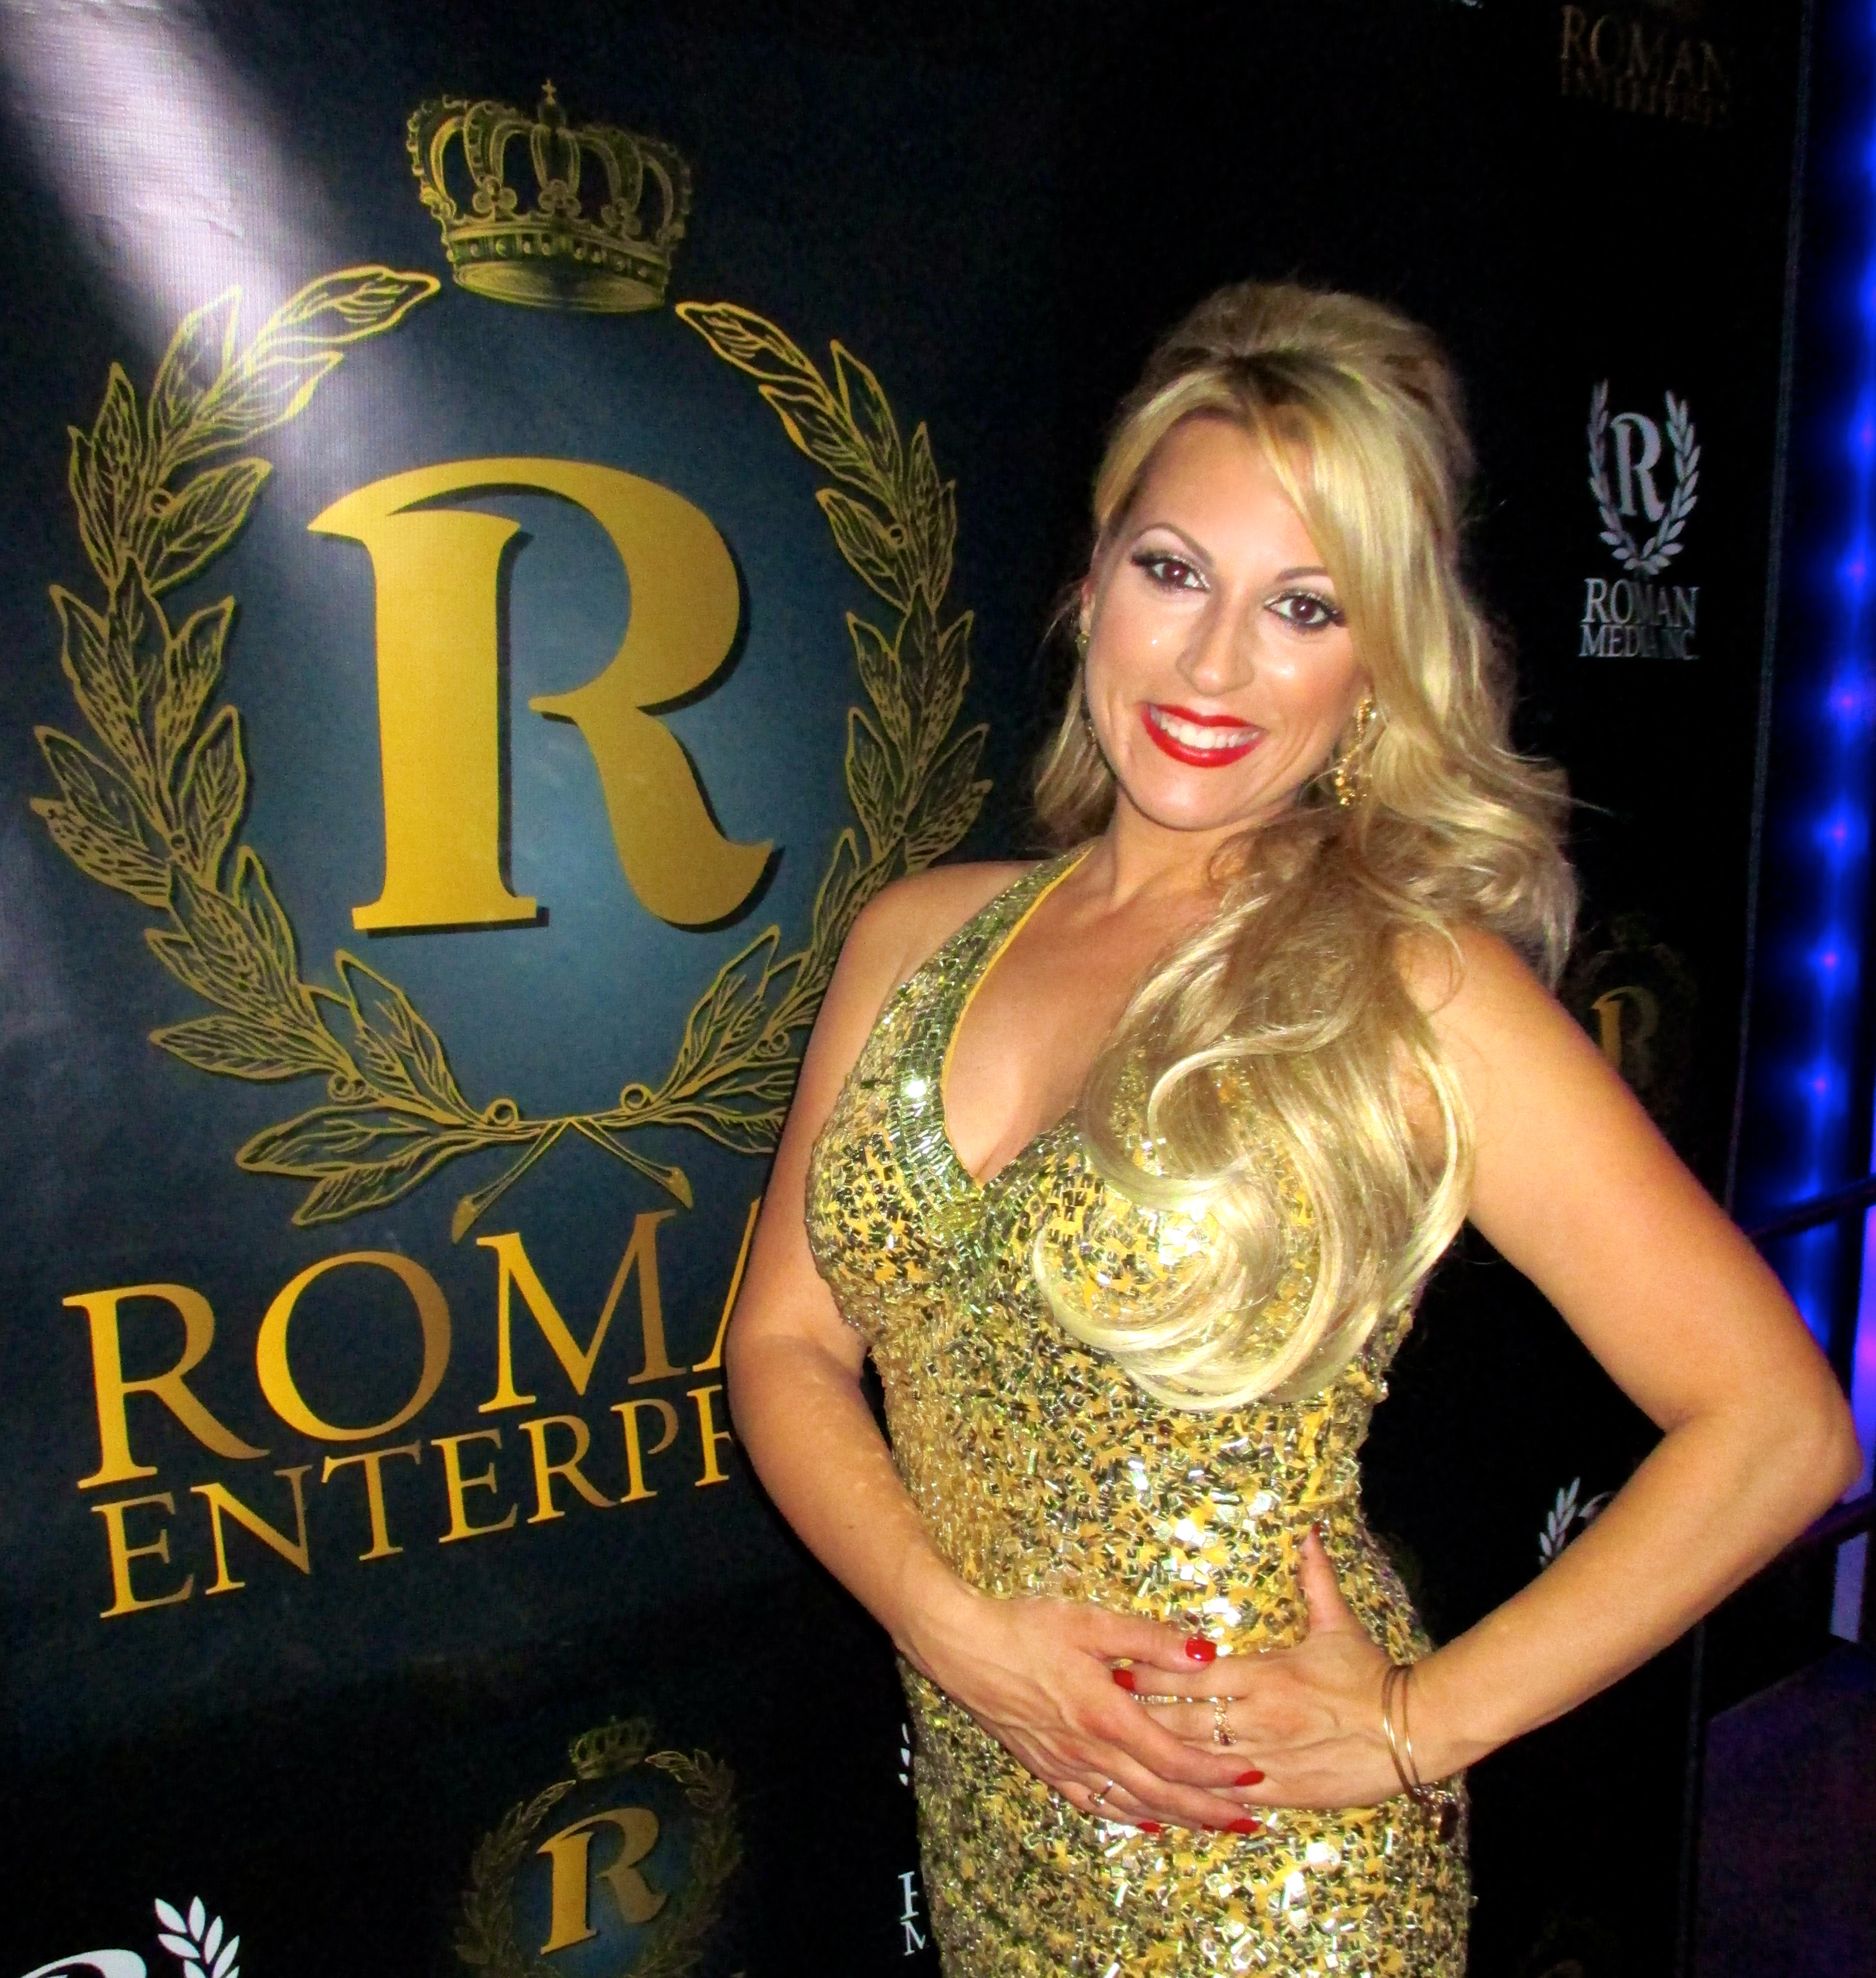 Michelle Romano at the launch party event for ROMAN ENTERPRISES